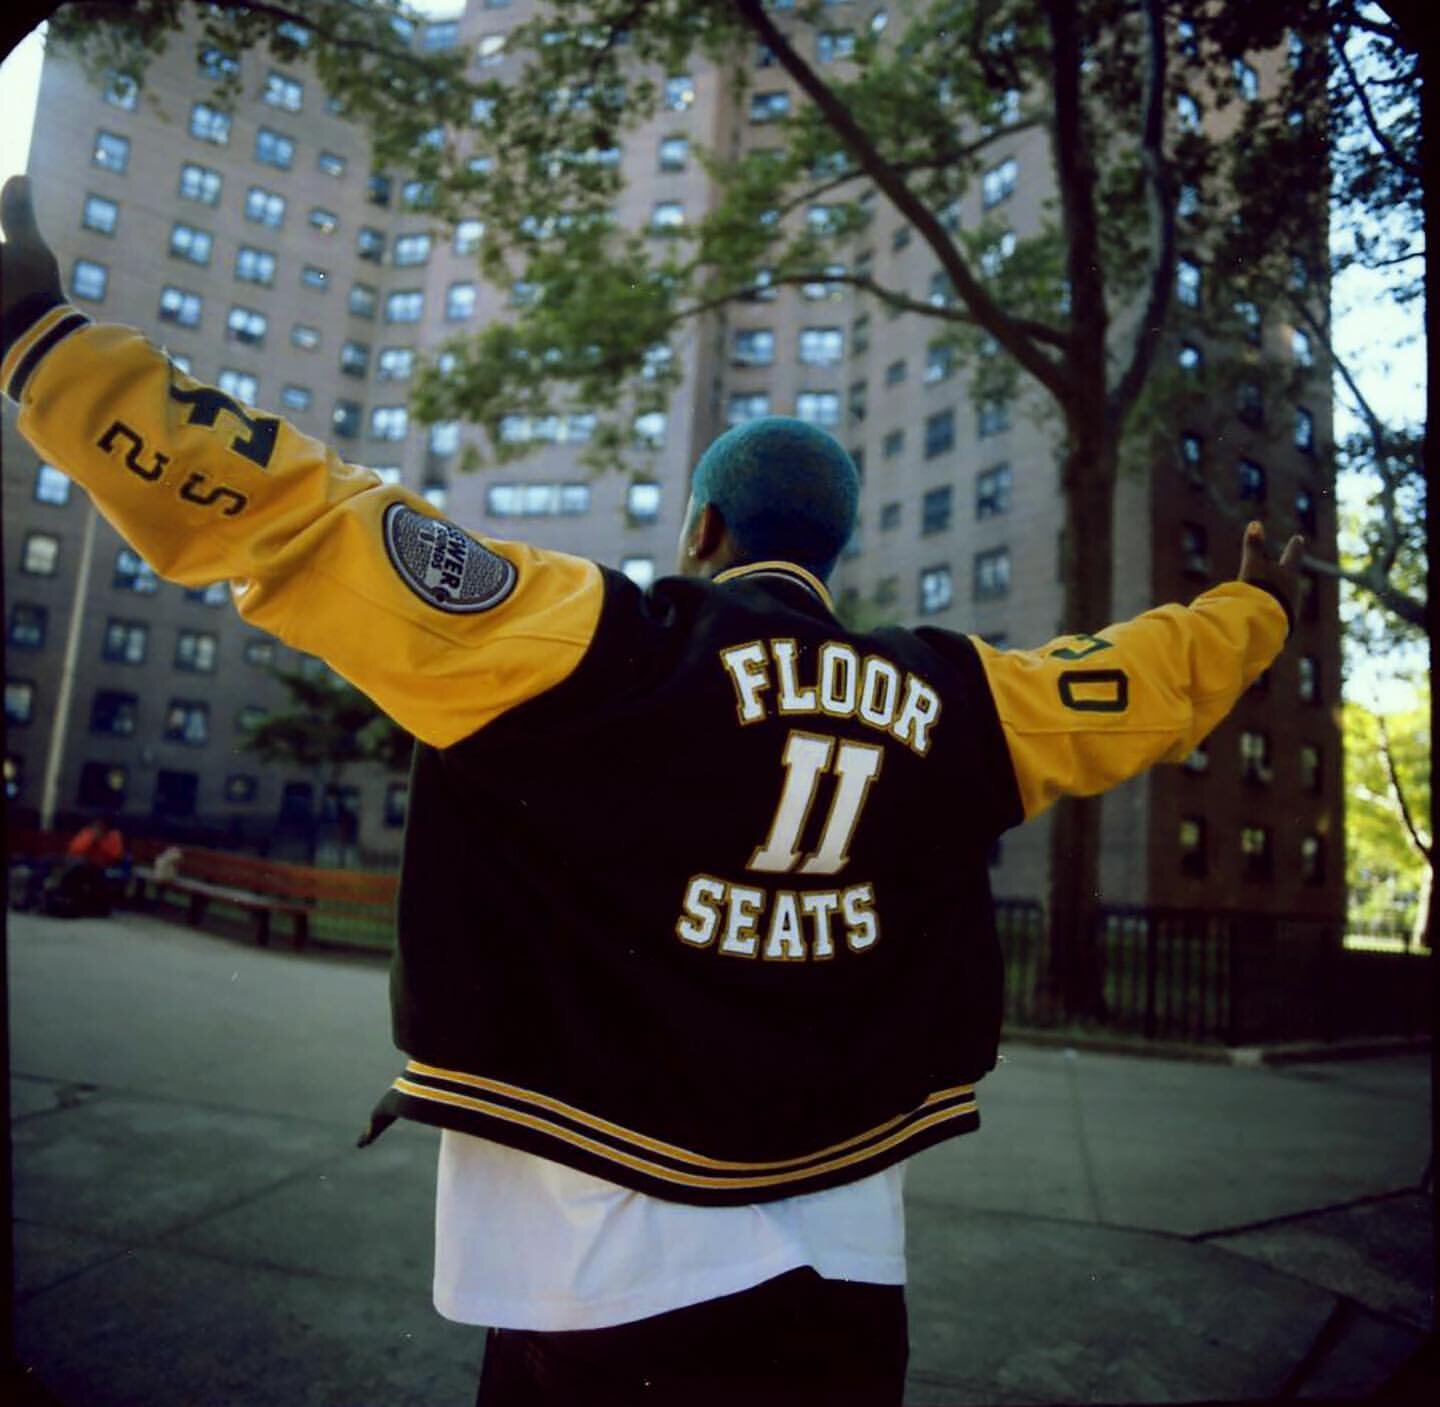 A$AP Ferg "Floor Seats II"